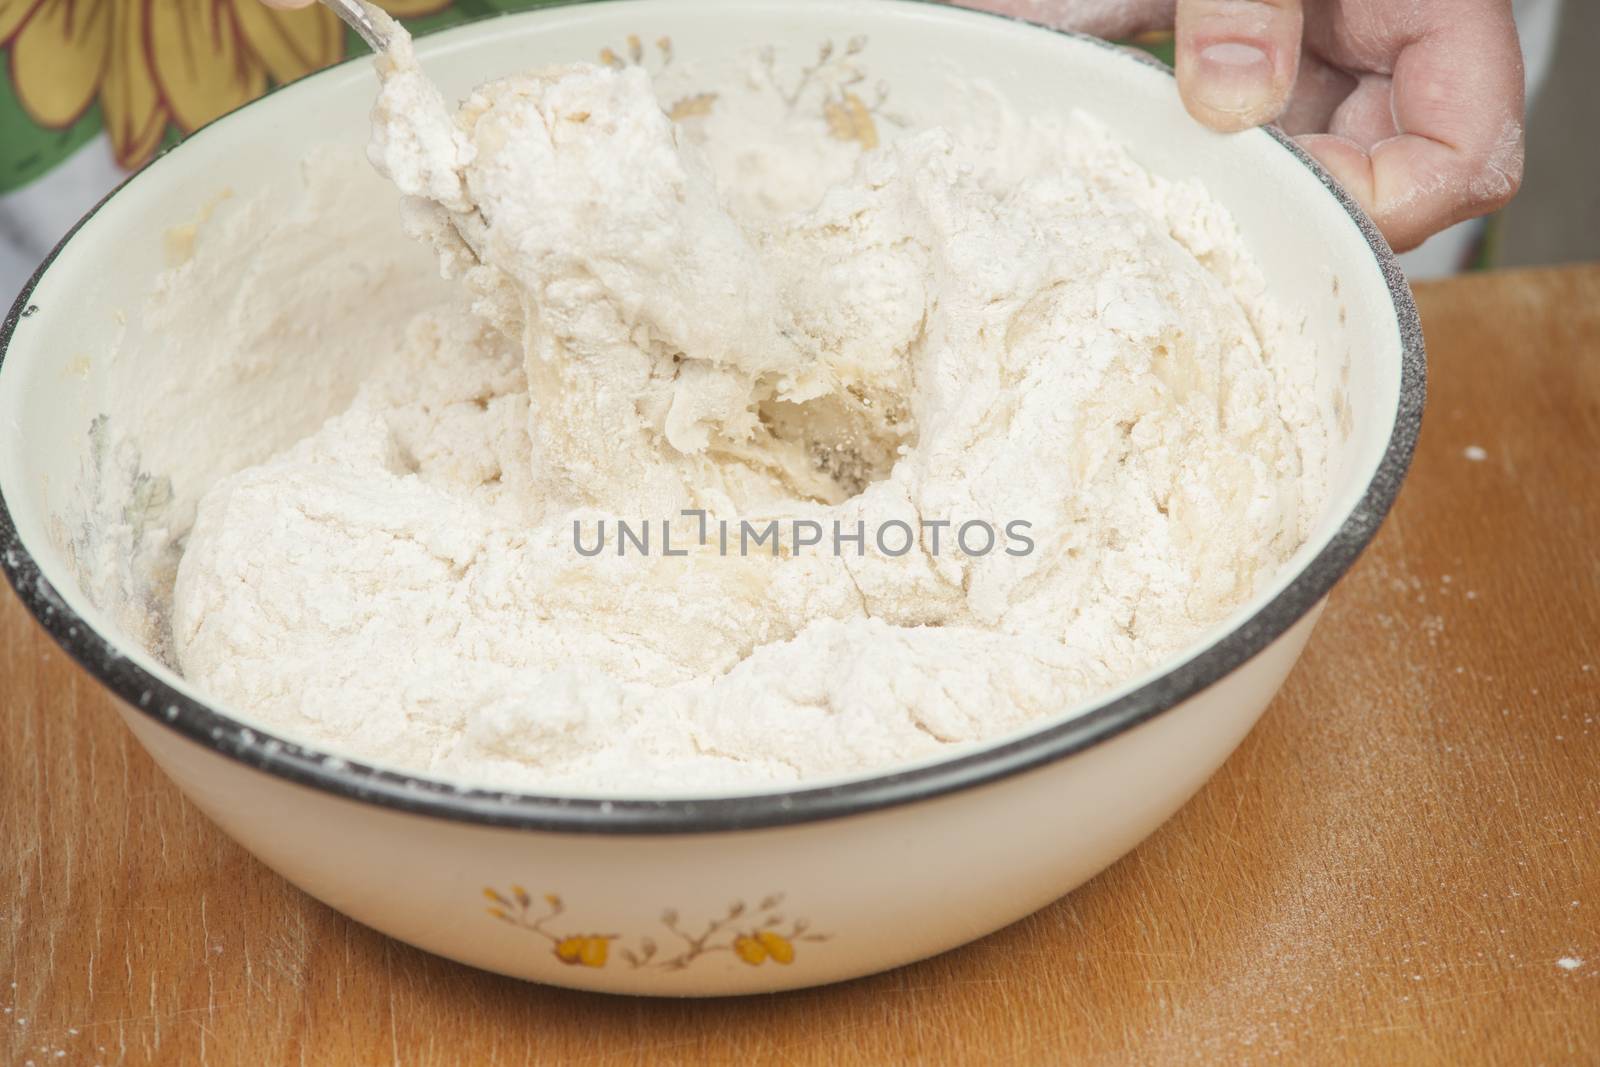 Women's hands preparing fresh yeast dough in the bowl.